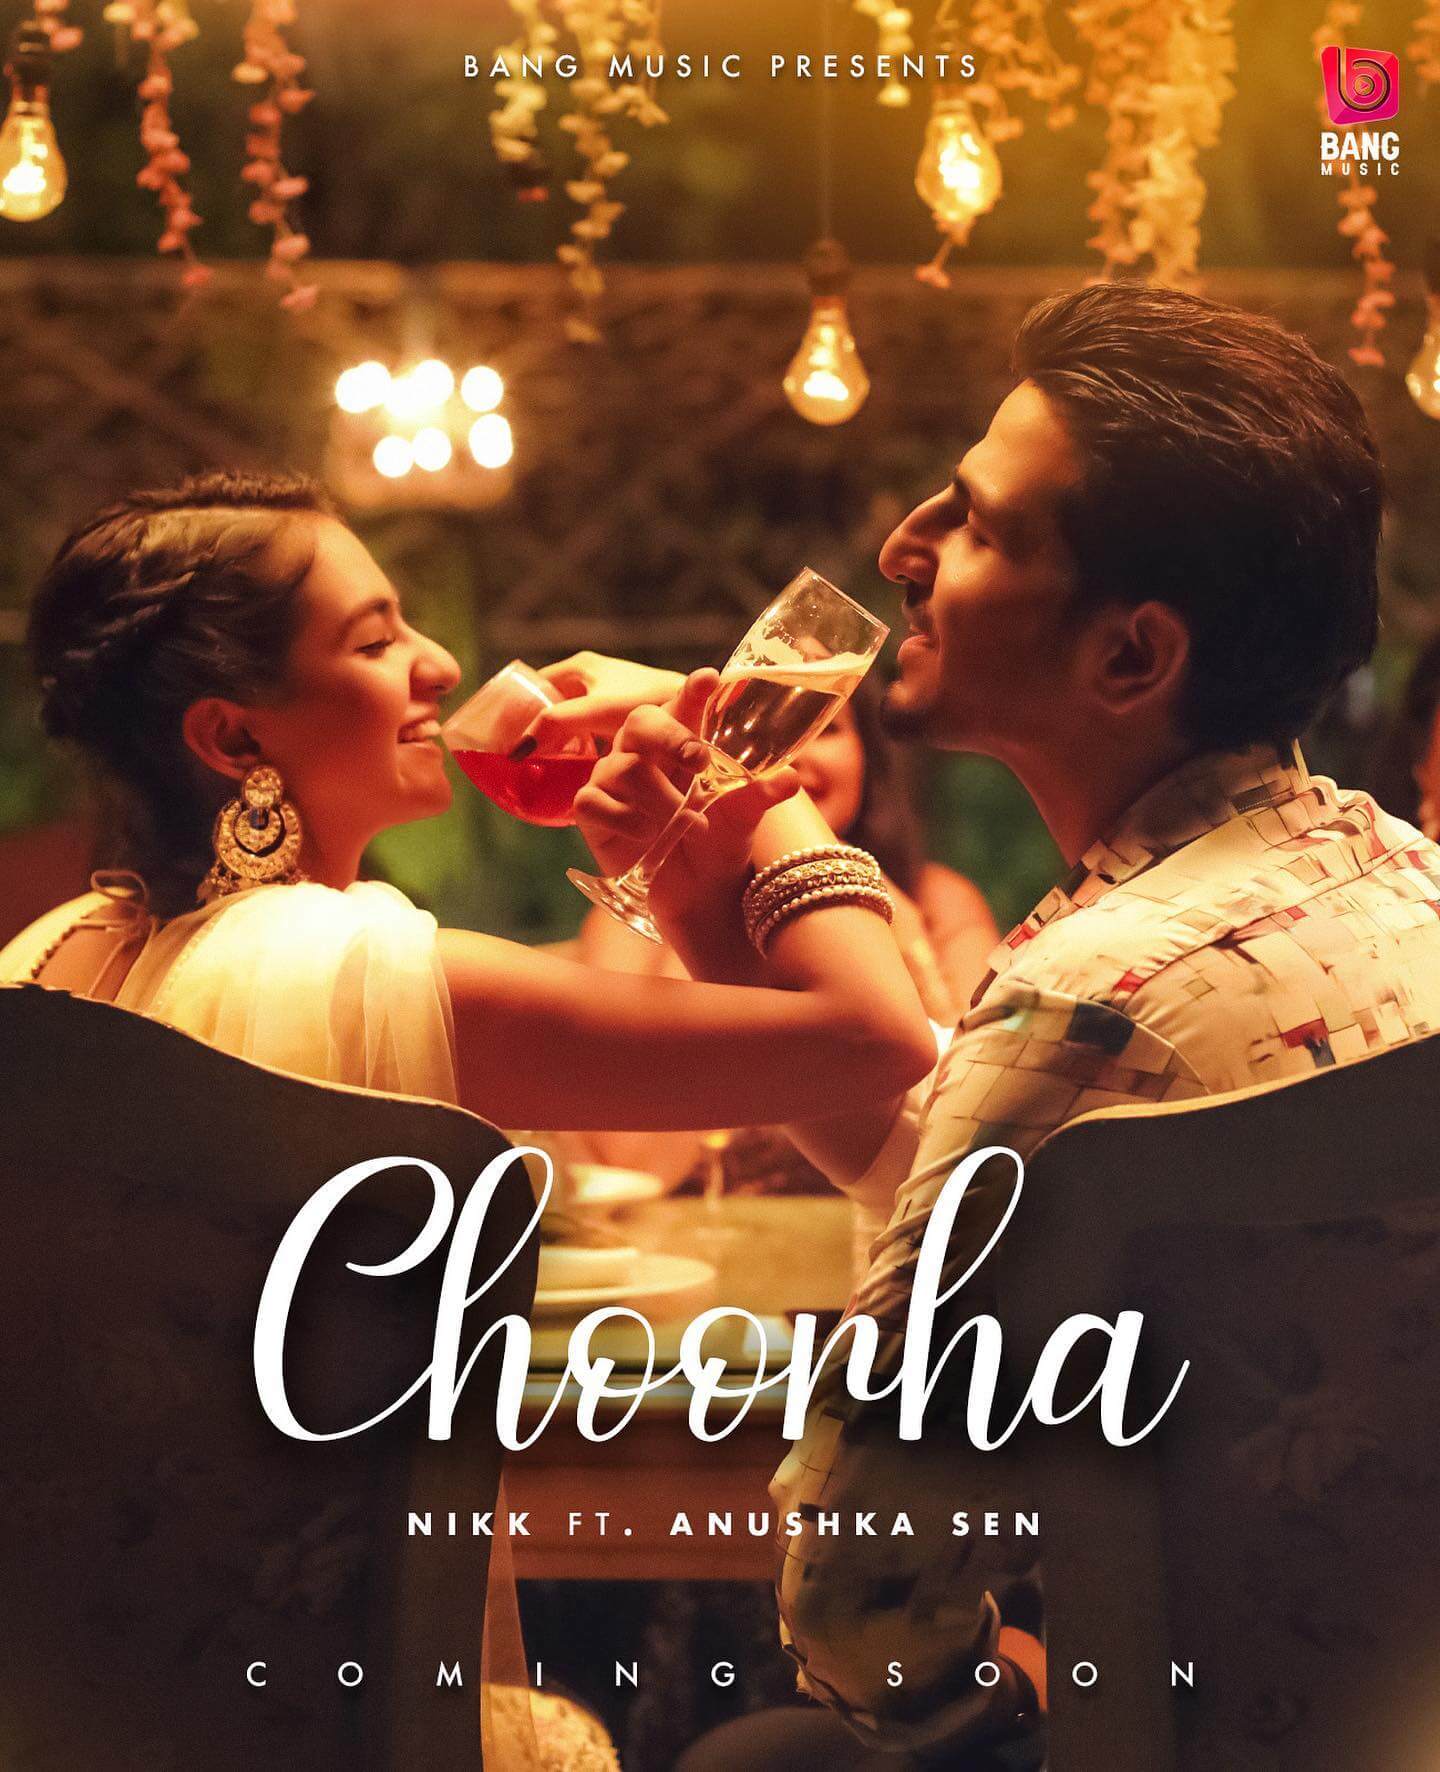 Choorha Music Video